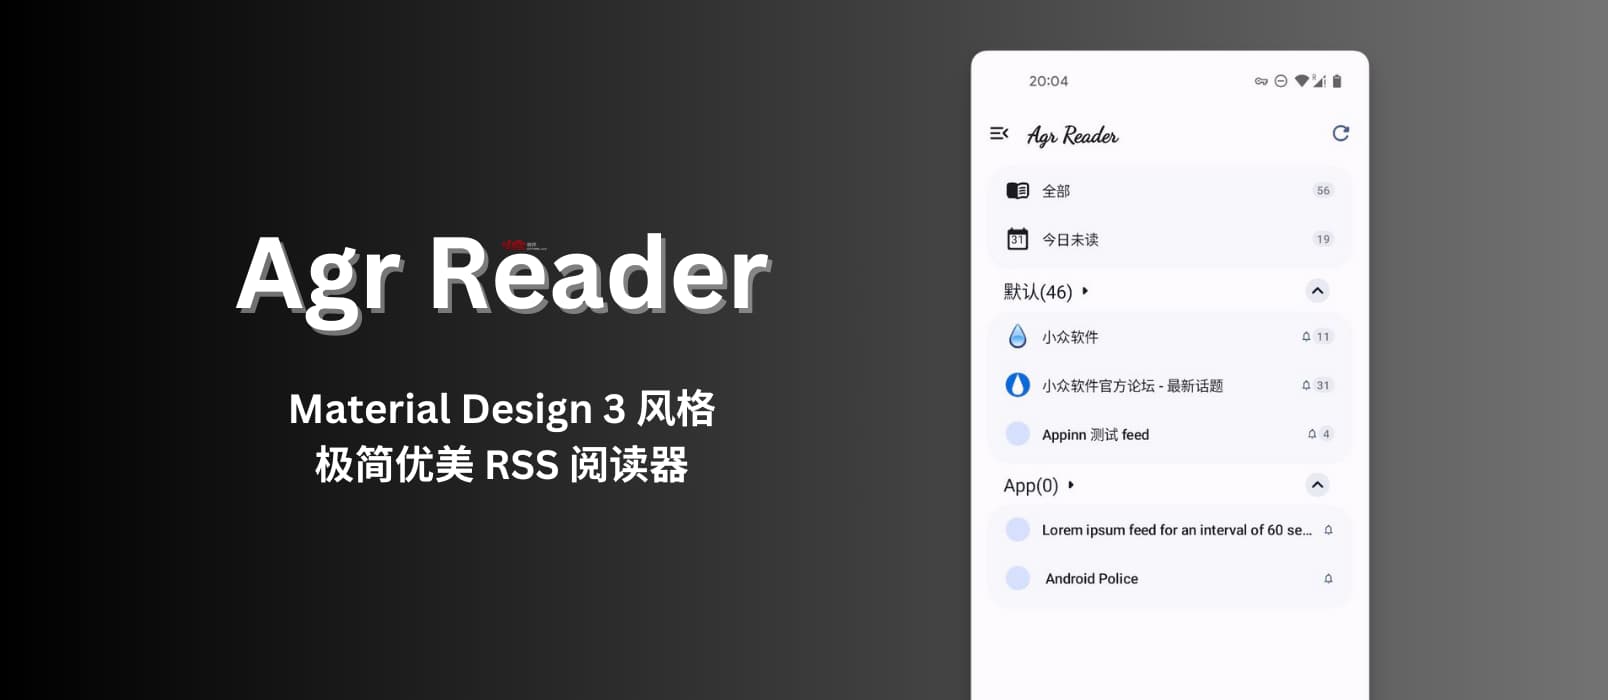 Agr Reader - 一个简单的安卓 RSS 阅读器，Material Design 3 风格 1